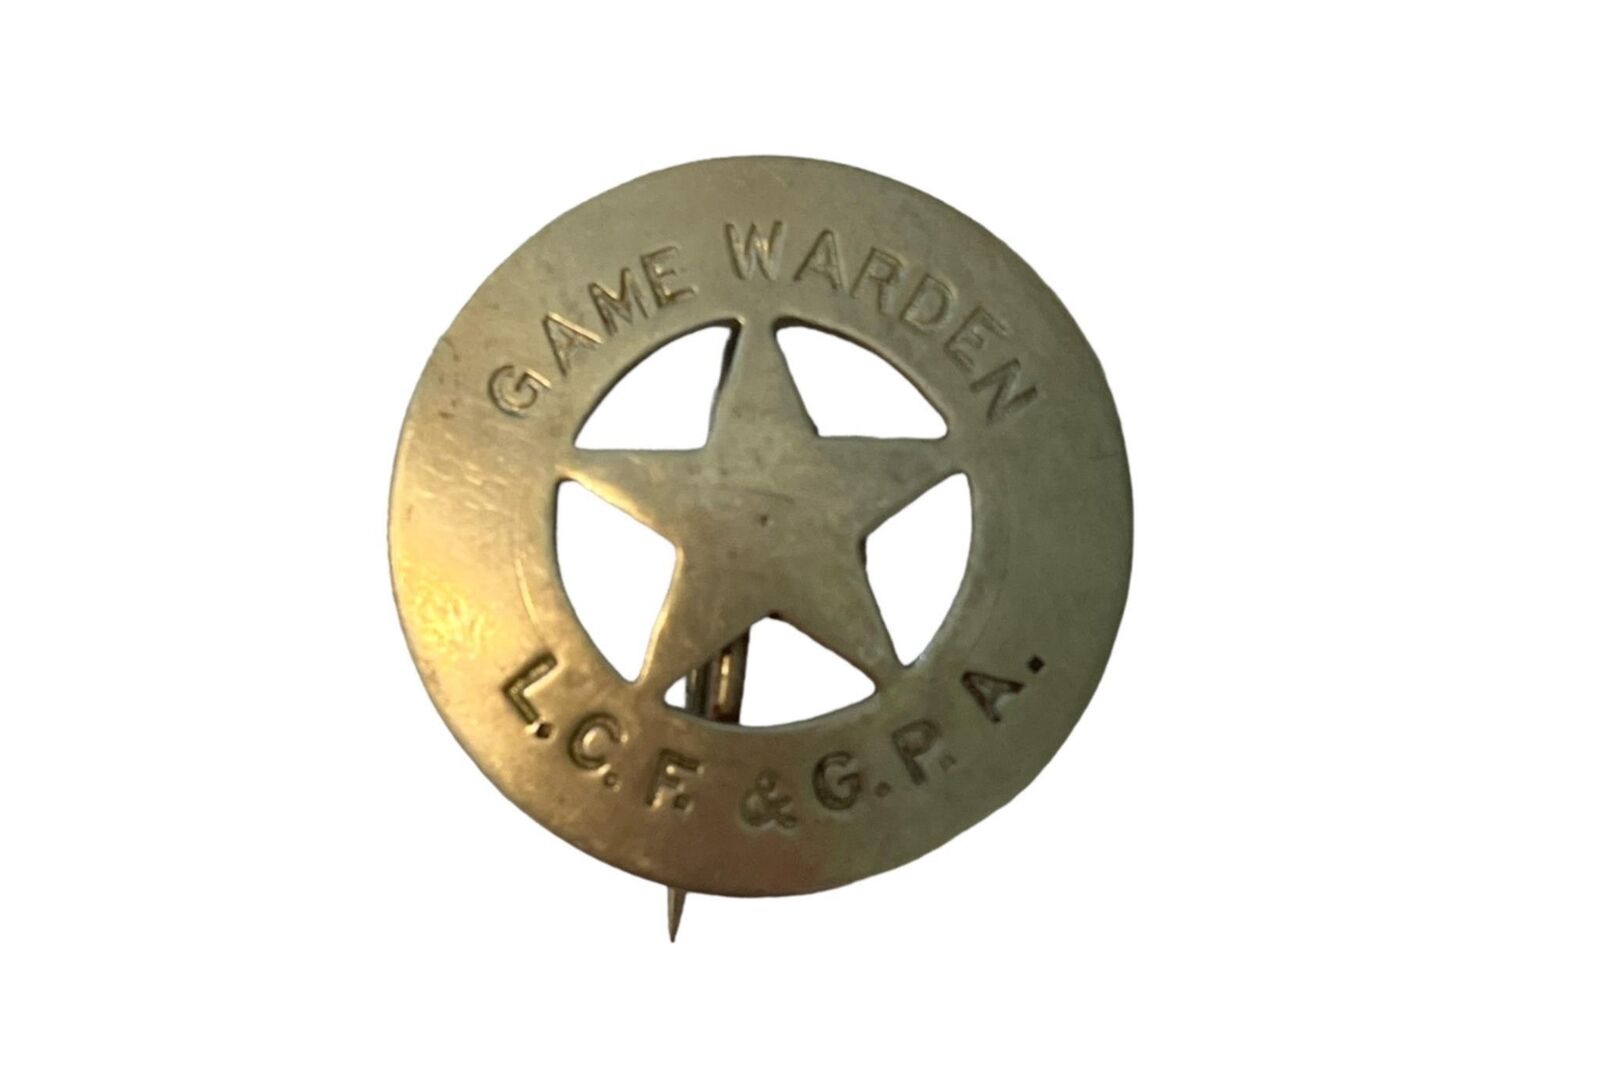 Vintage Obsolete Game Warden Badge LCF La Canada Flintridge GPA Game Production